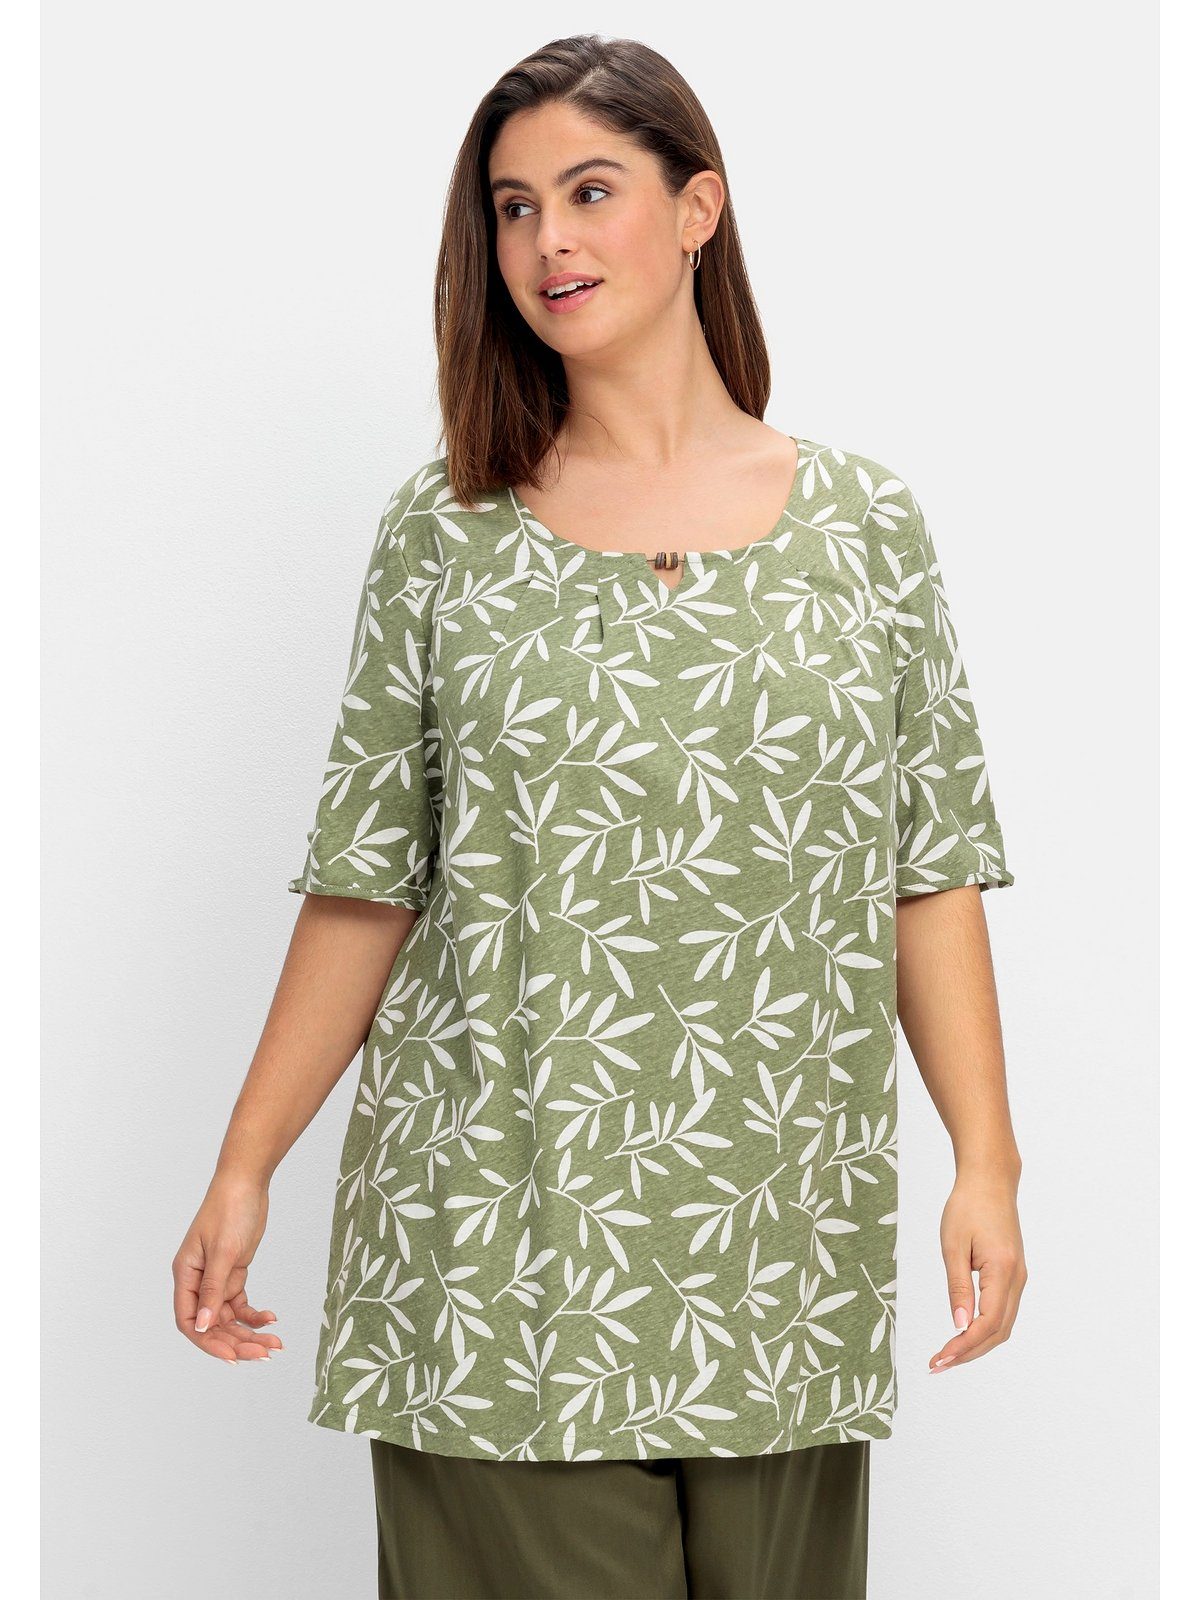 Sheego T-Shirt Große Größen mit Blätterprint, im Leinen-Mix khaki gemustert